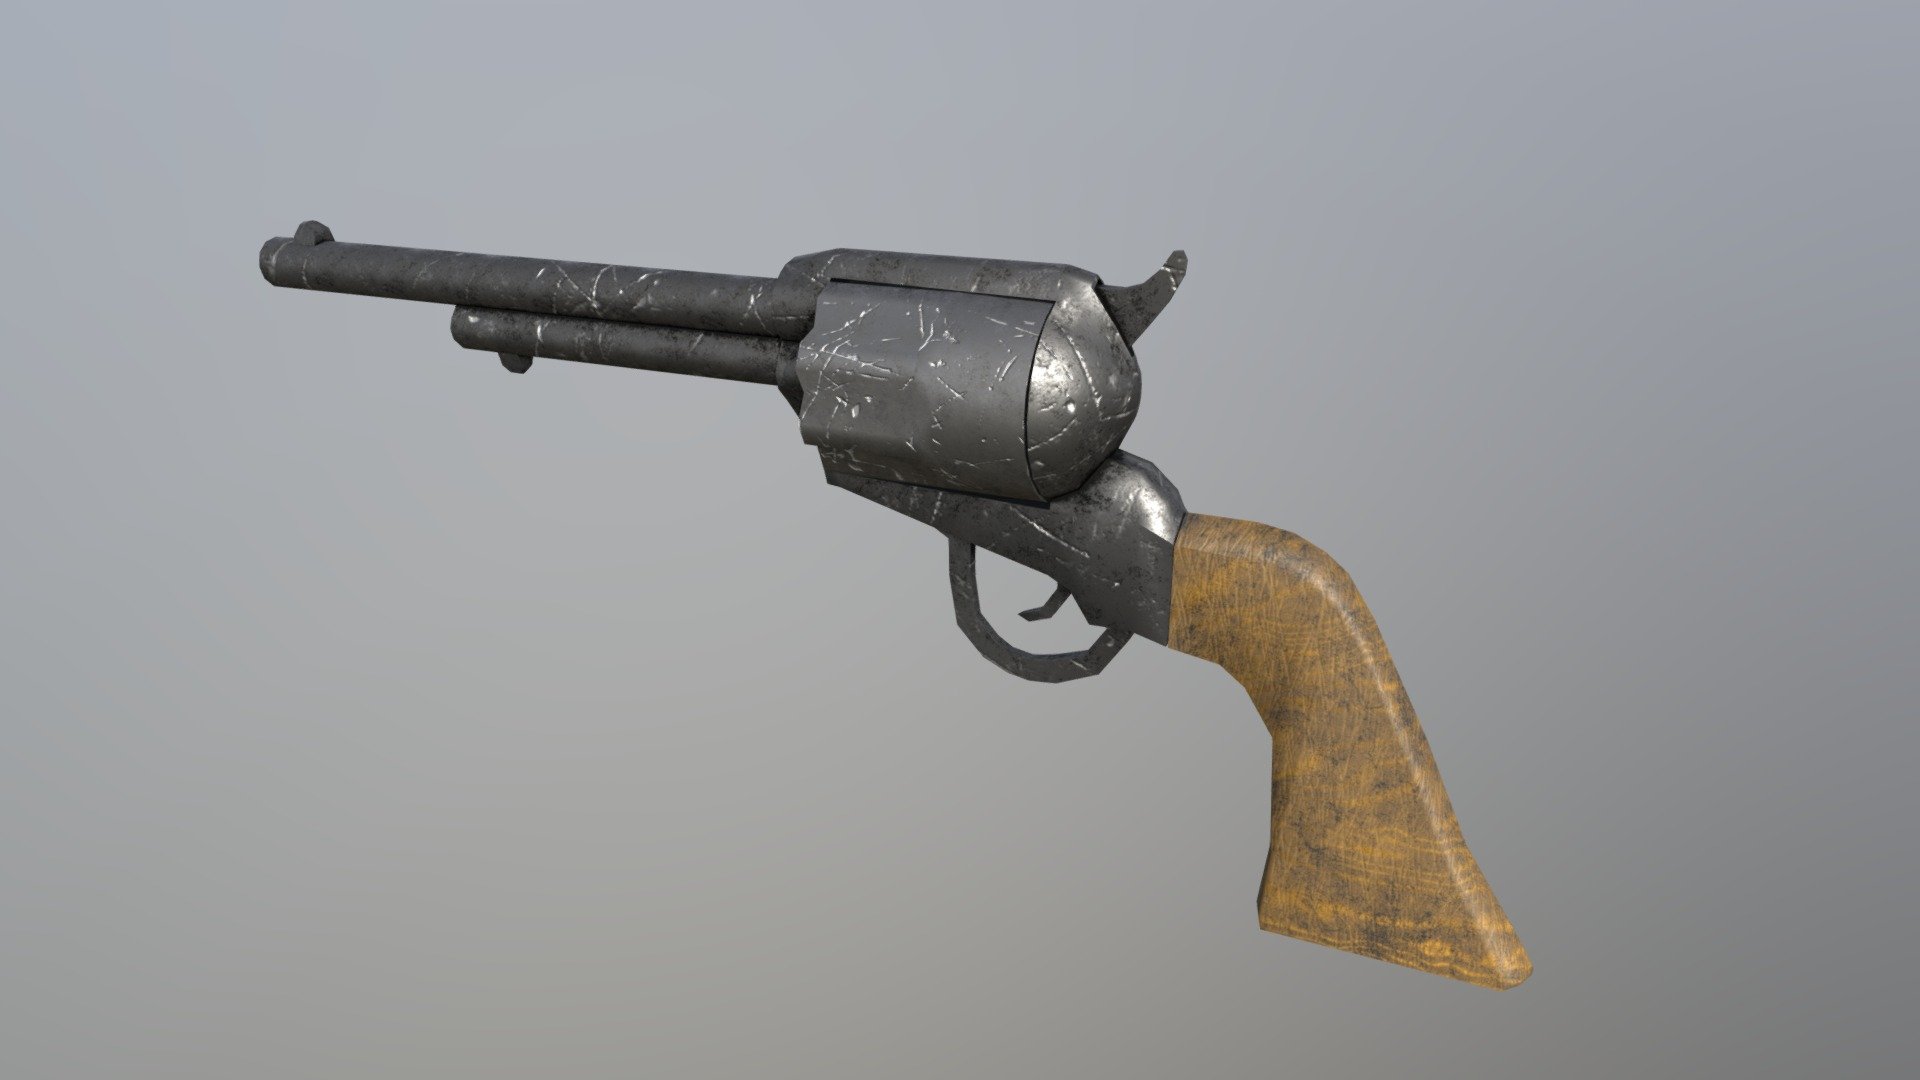 Western Revolver